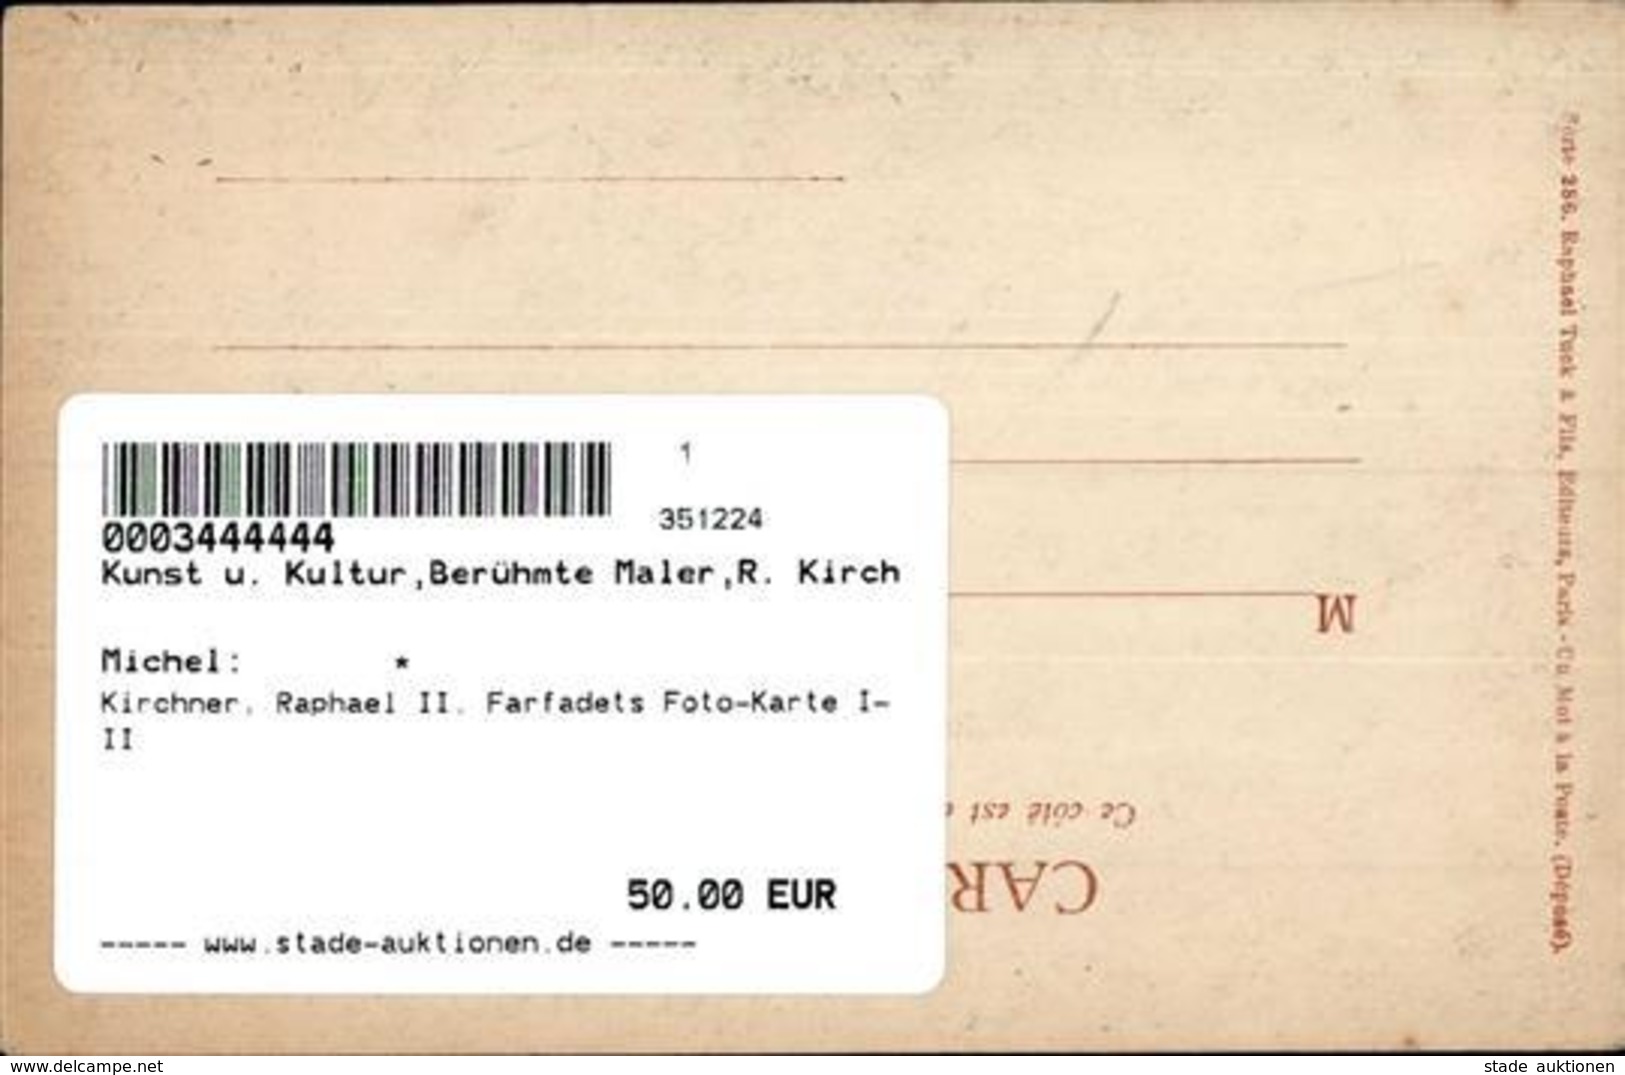 Kirchner, Raphael II. Farfadets Foto-Karte I-II - Kirchner, Raphael